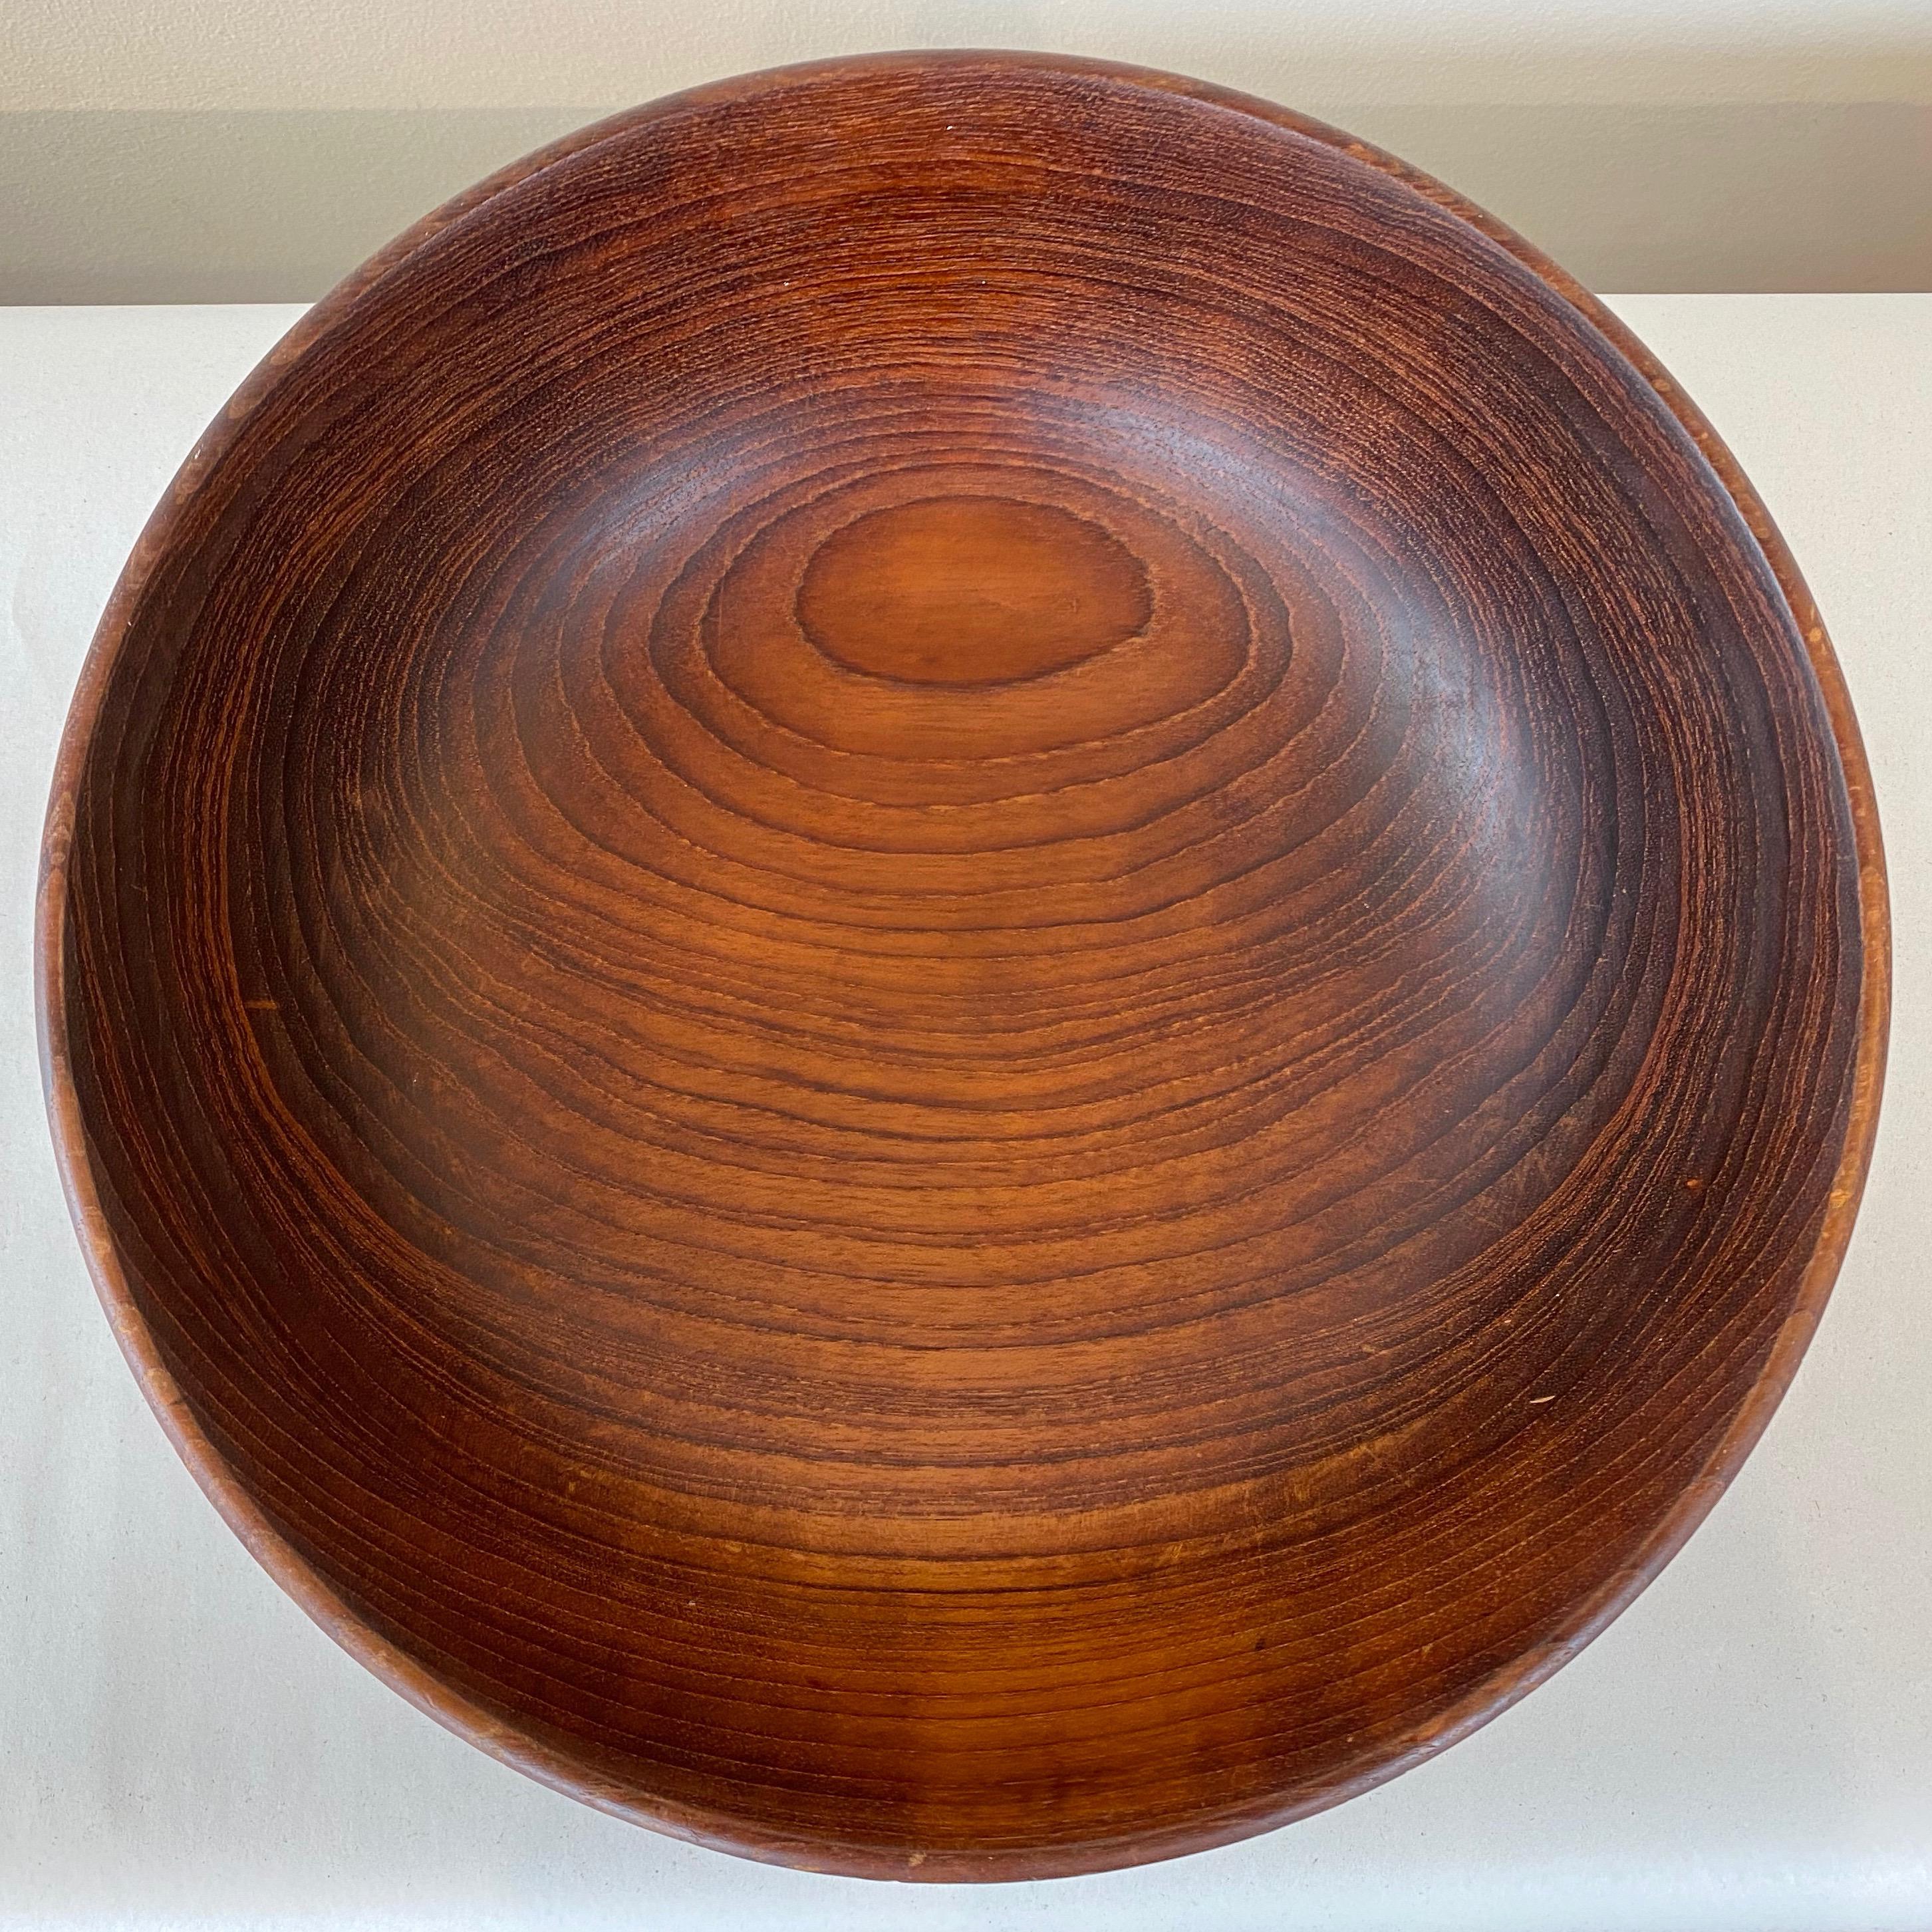 turned bowl shapes